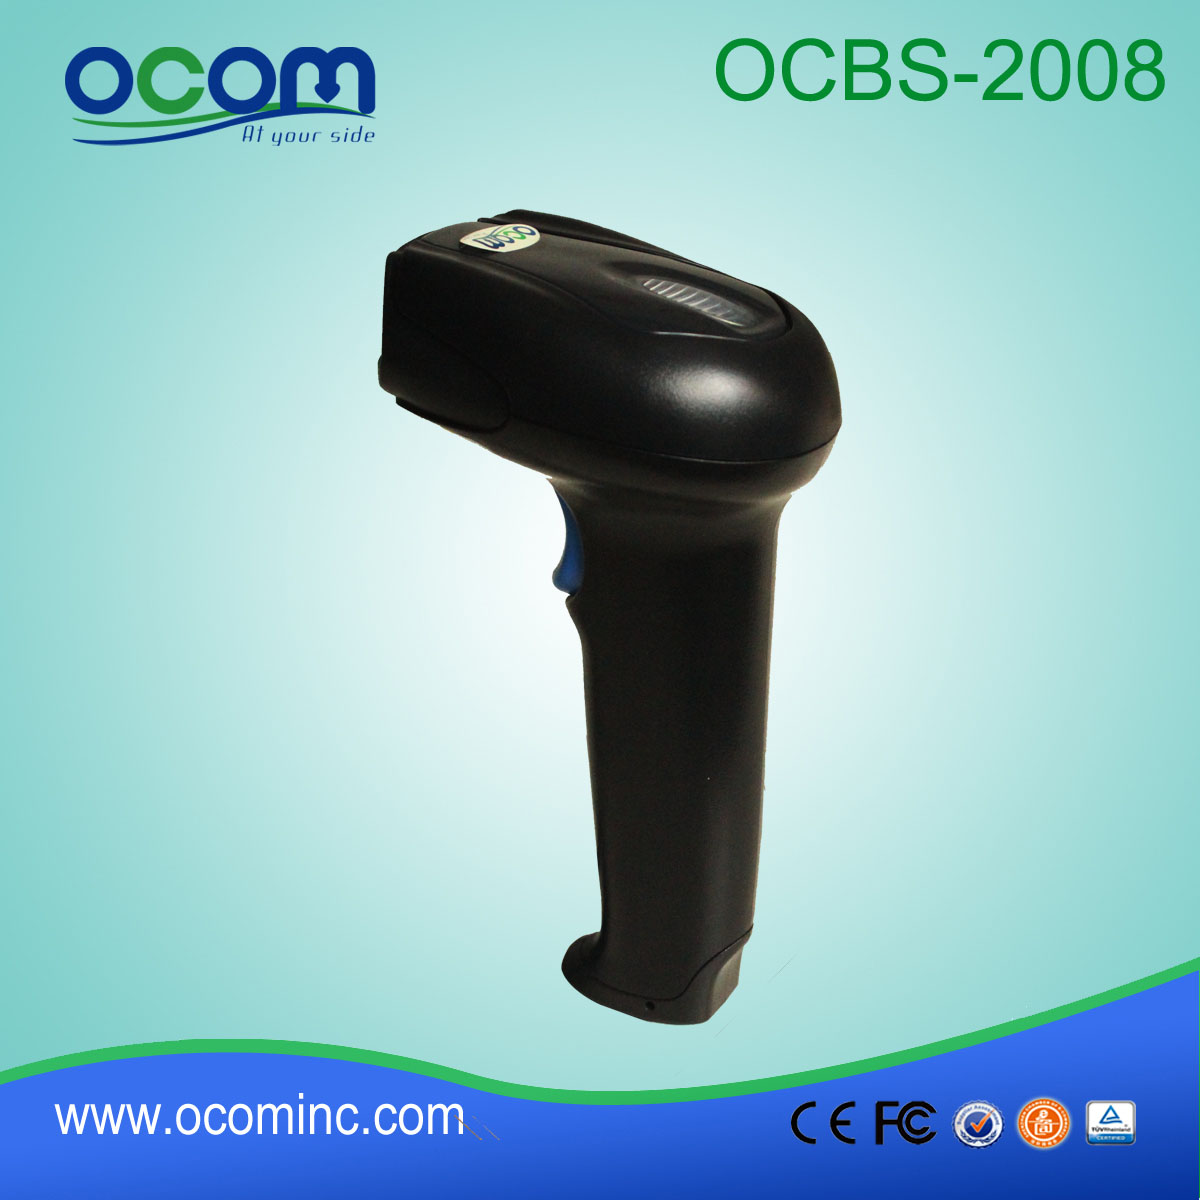 OCBs-2008 Micro USB Omnidirectional Barcode Scanner για σούπερ μάρκετ